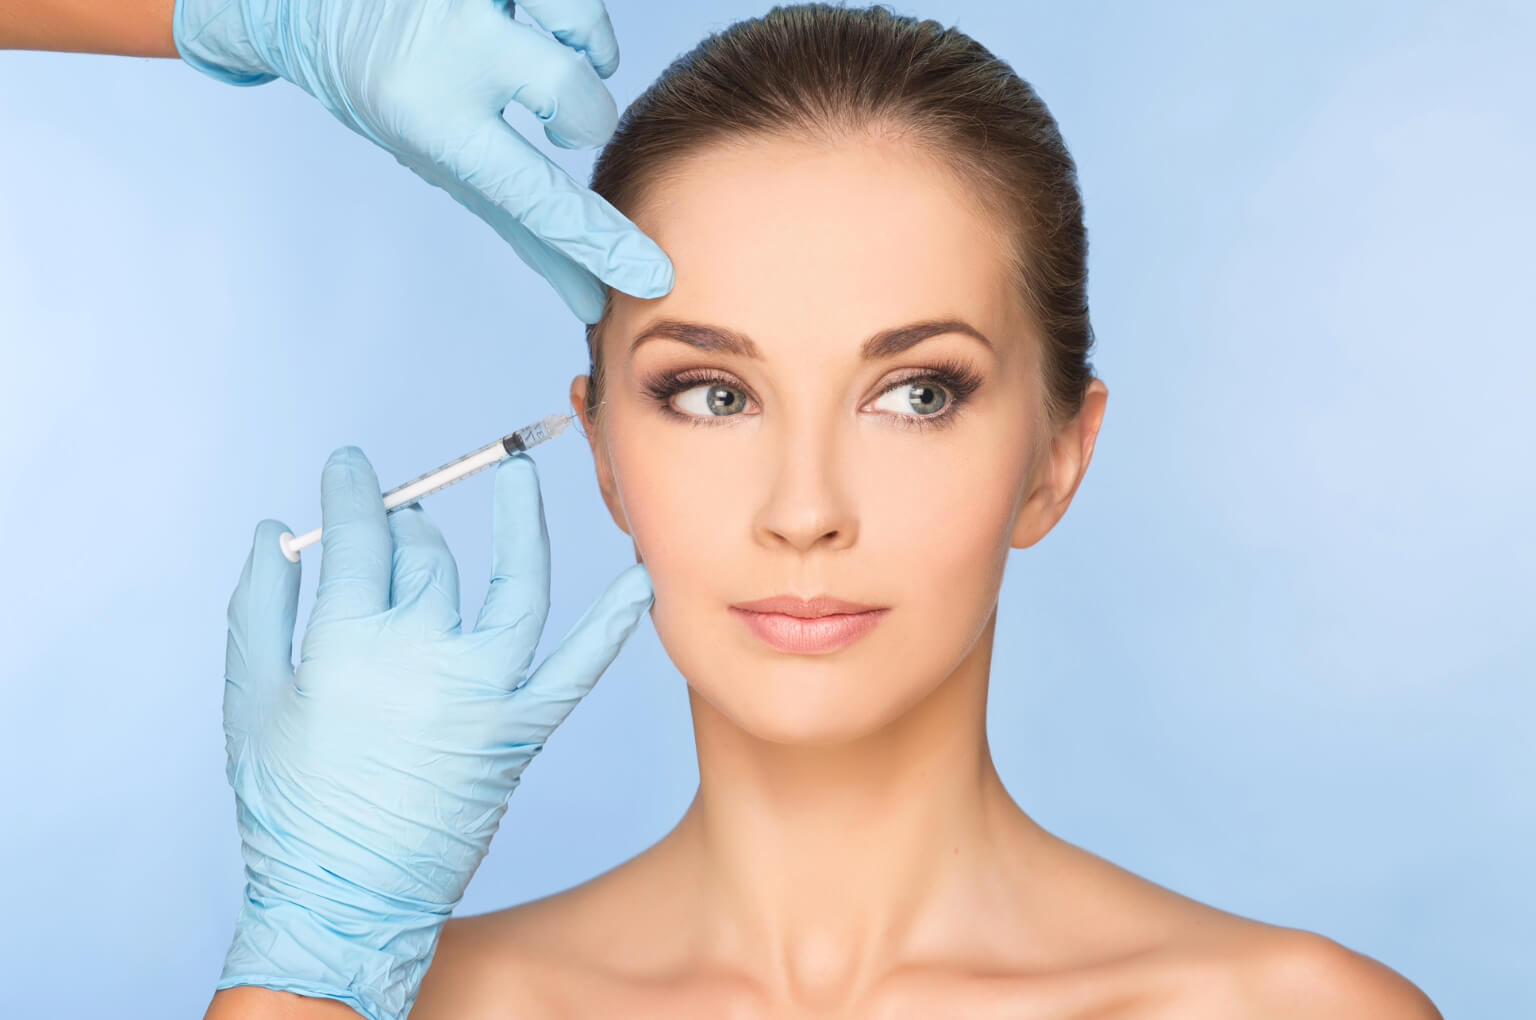 Is Botox a worthy treatment?